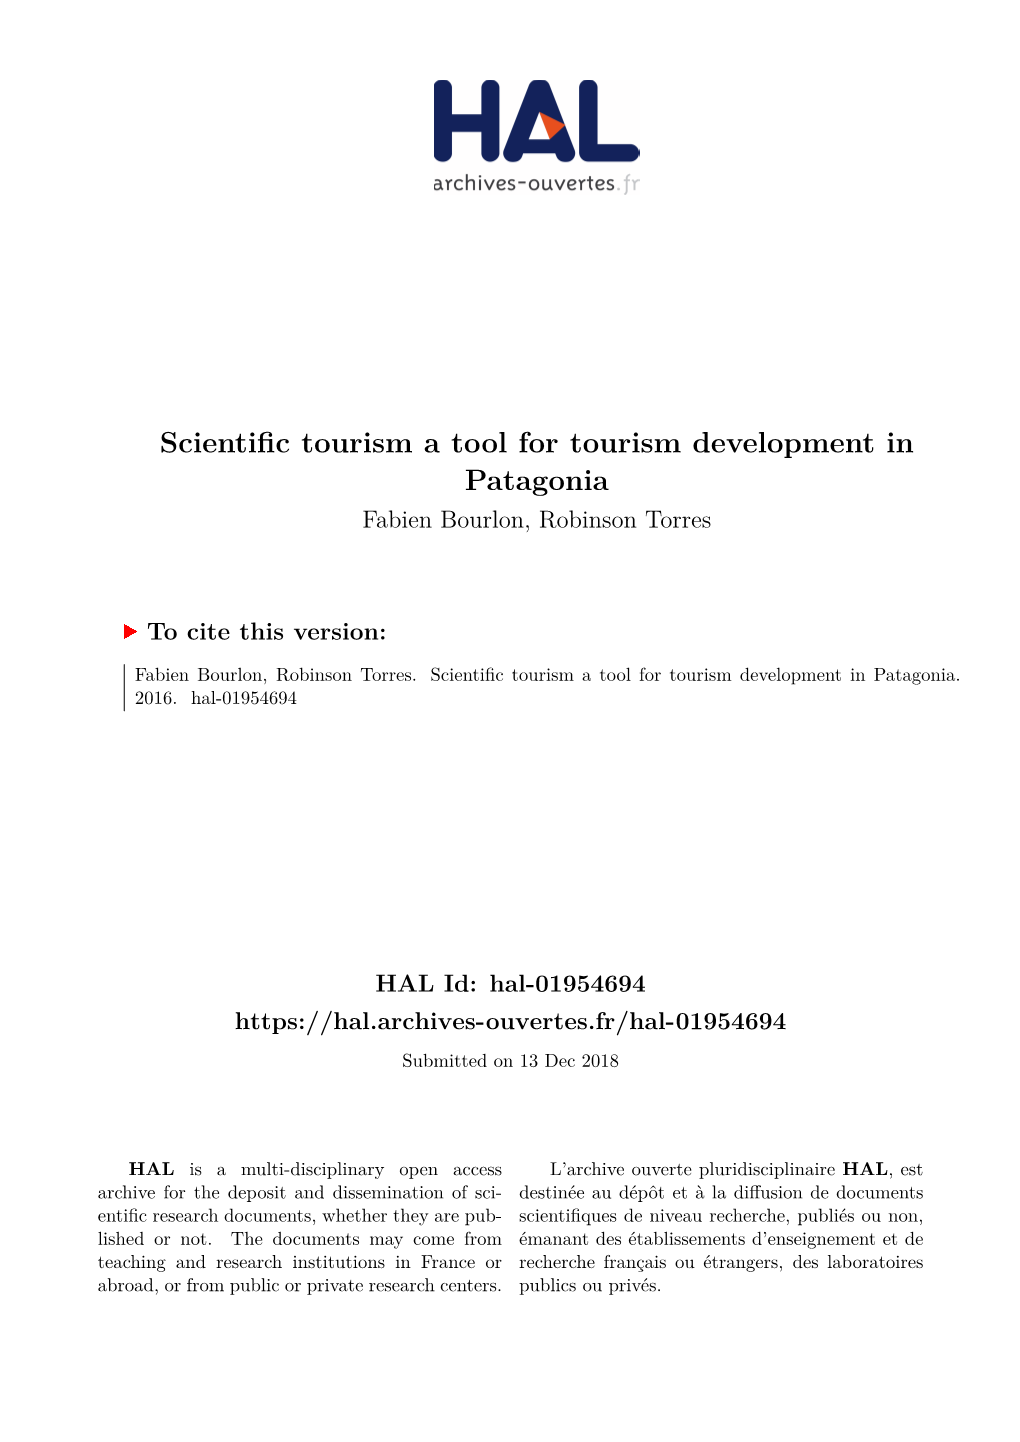 Scientific Tourism a Tool for Tourism Development in Patagonia Fabien Bourlon, Robinson Torres